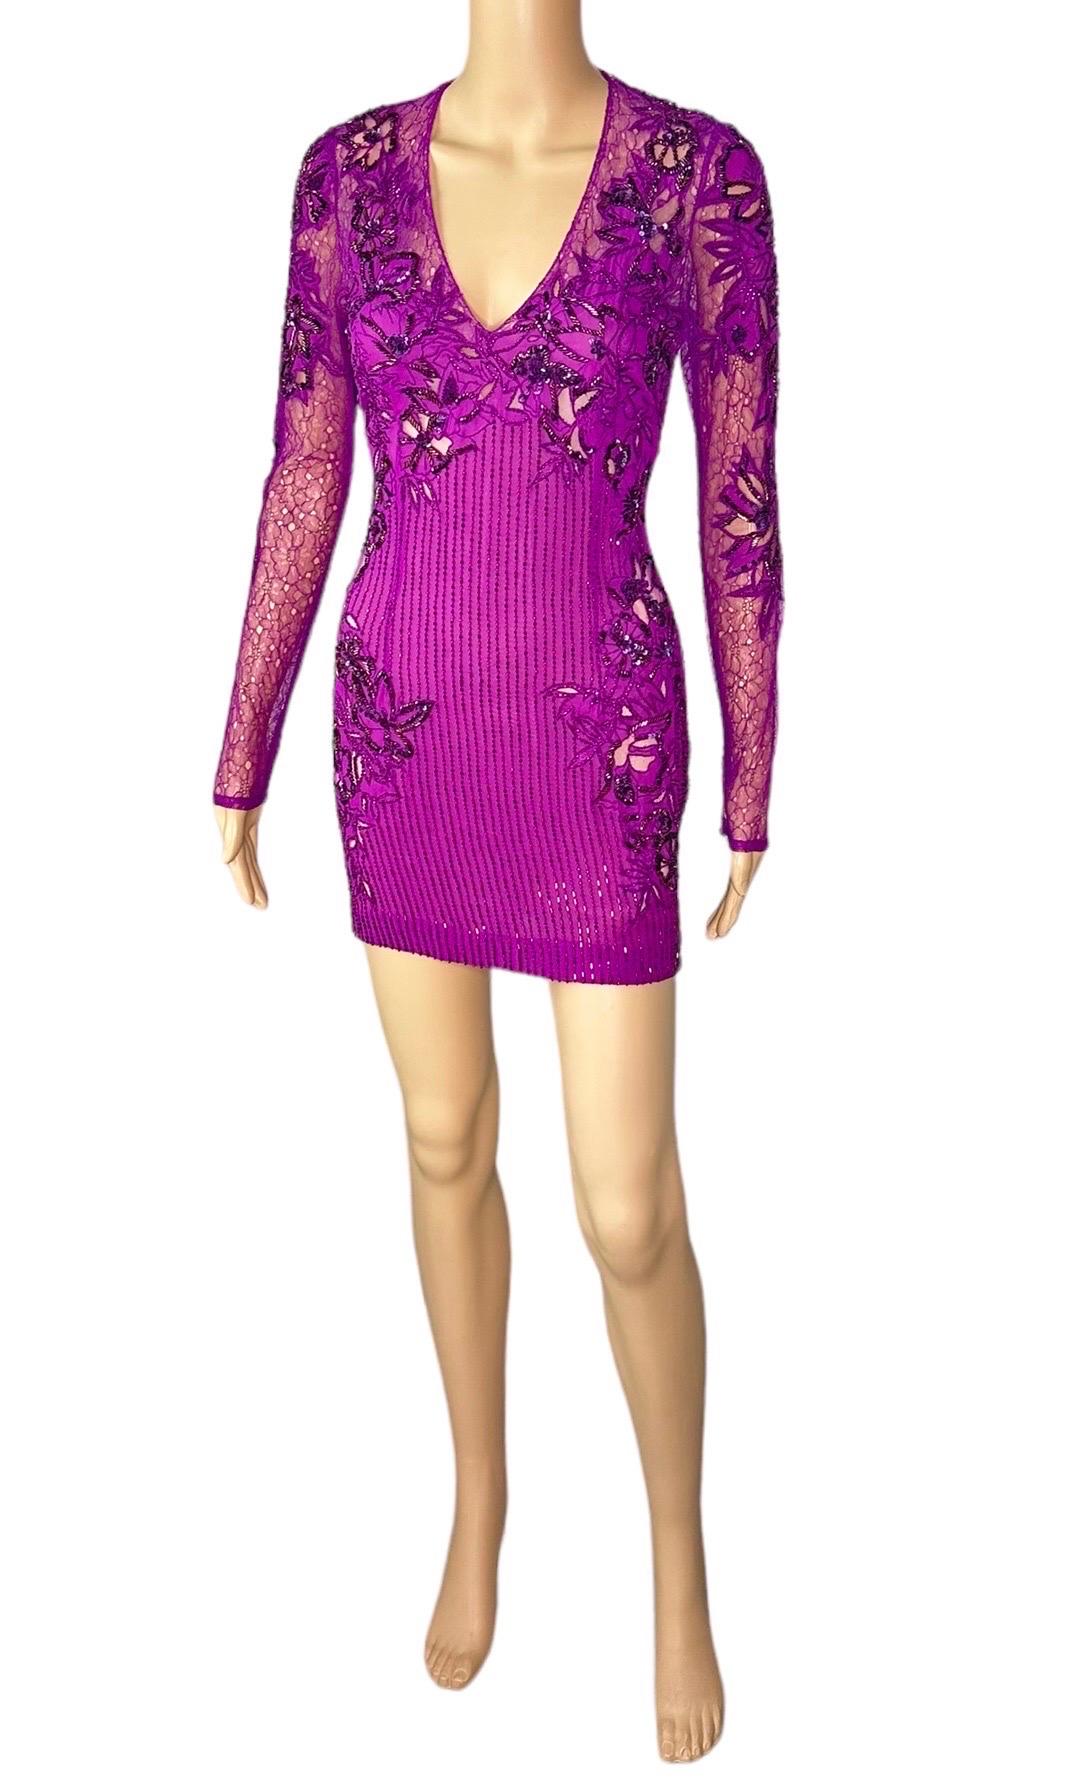 Roberto Cavalli Unworn S/S 2016 Embellished Sheer Lace Mesh Mini Dress For Sale 2